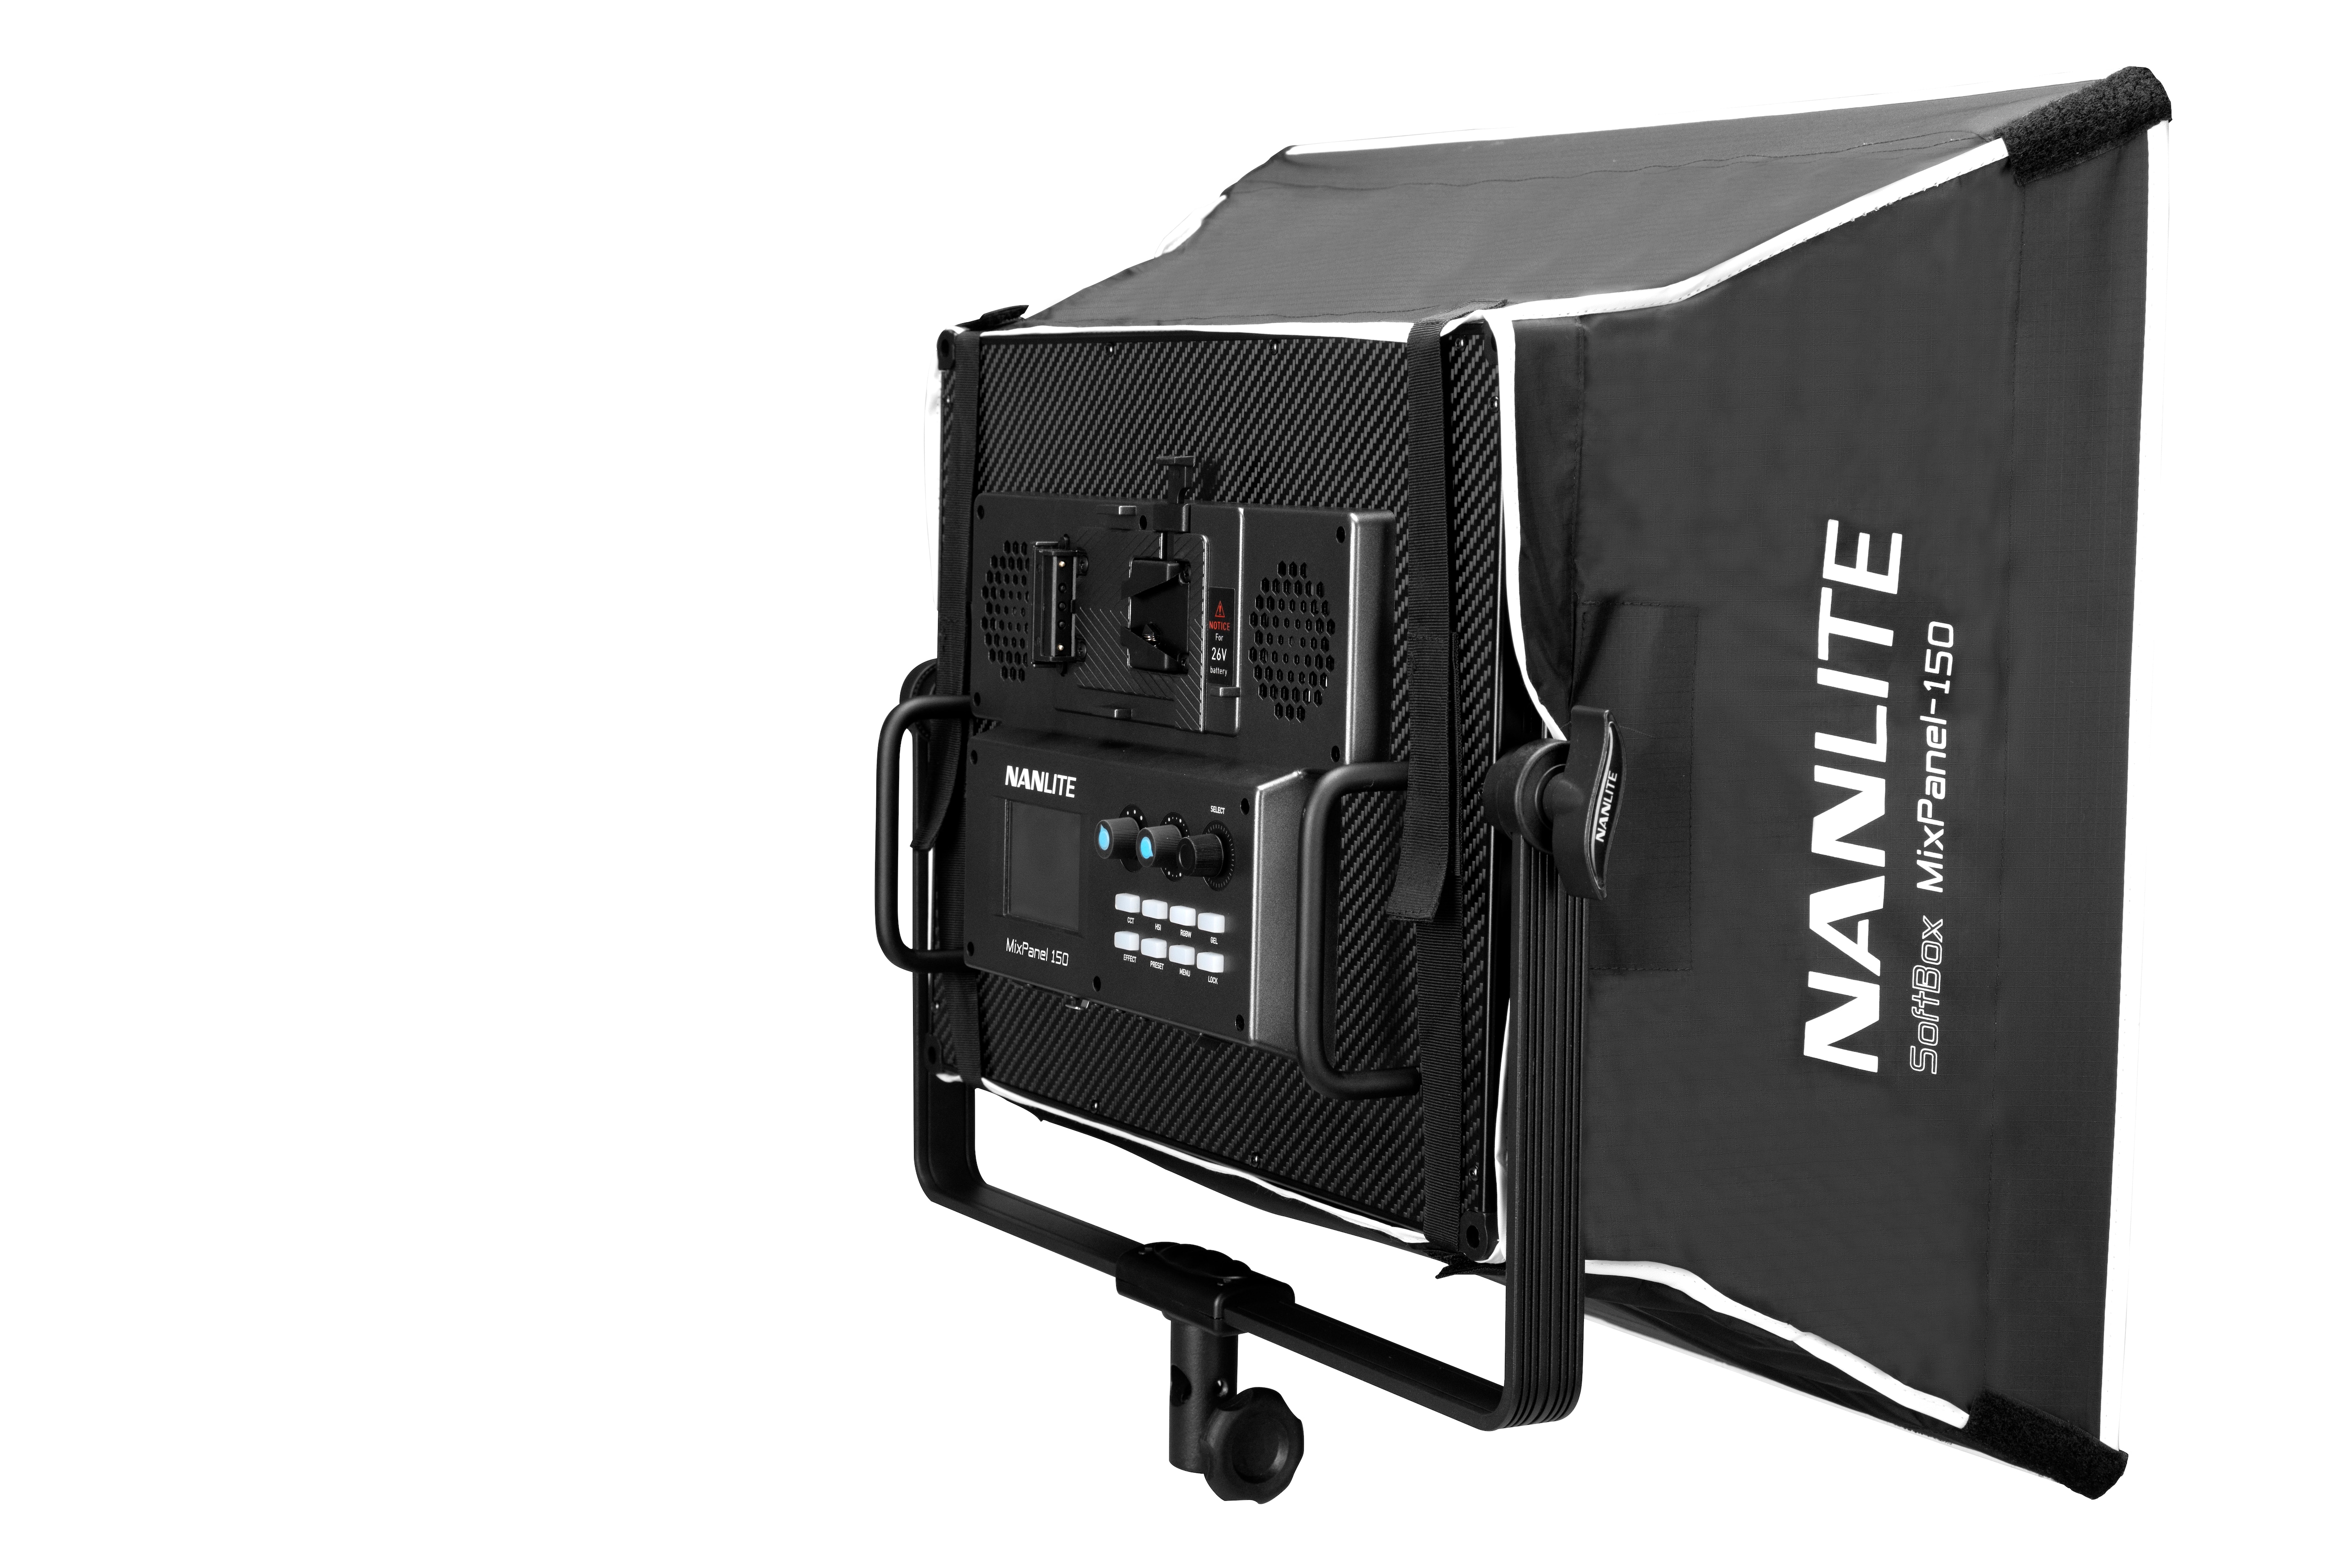 Nanlite Soft Box för MixPanel 150 inklusive raster